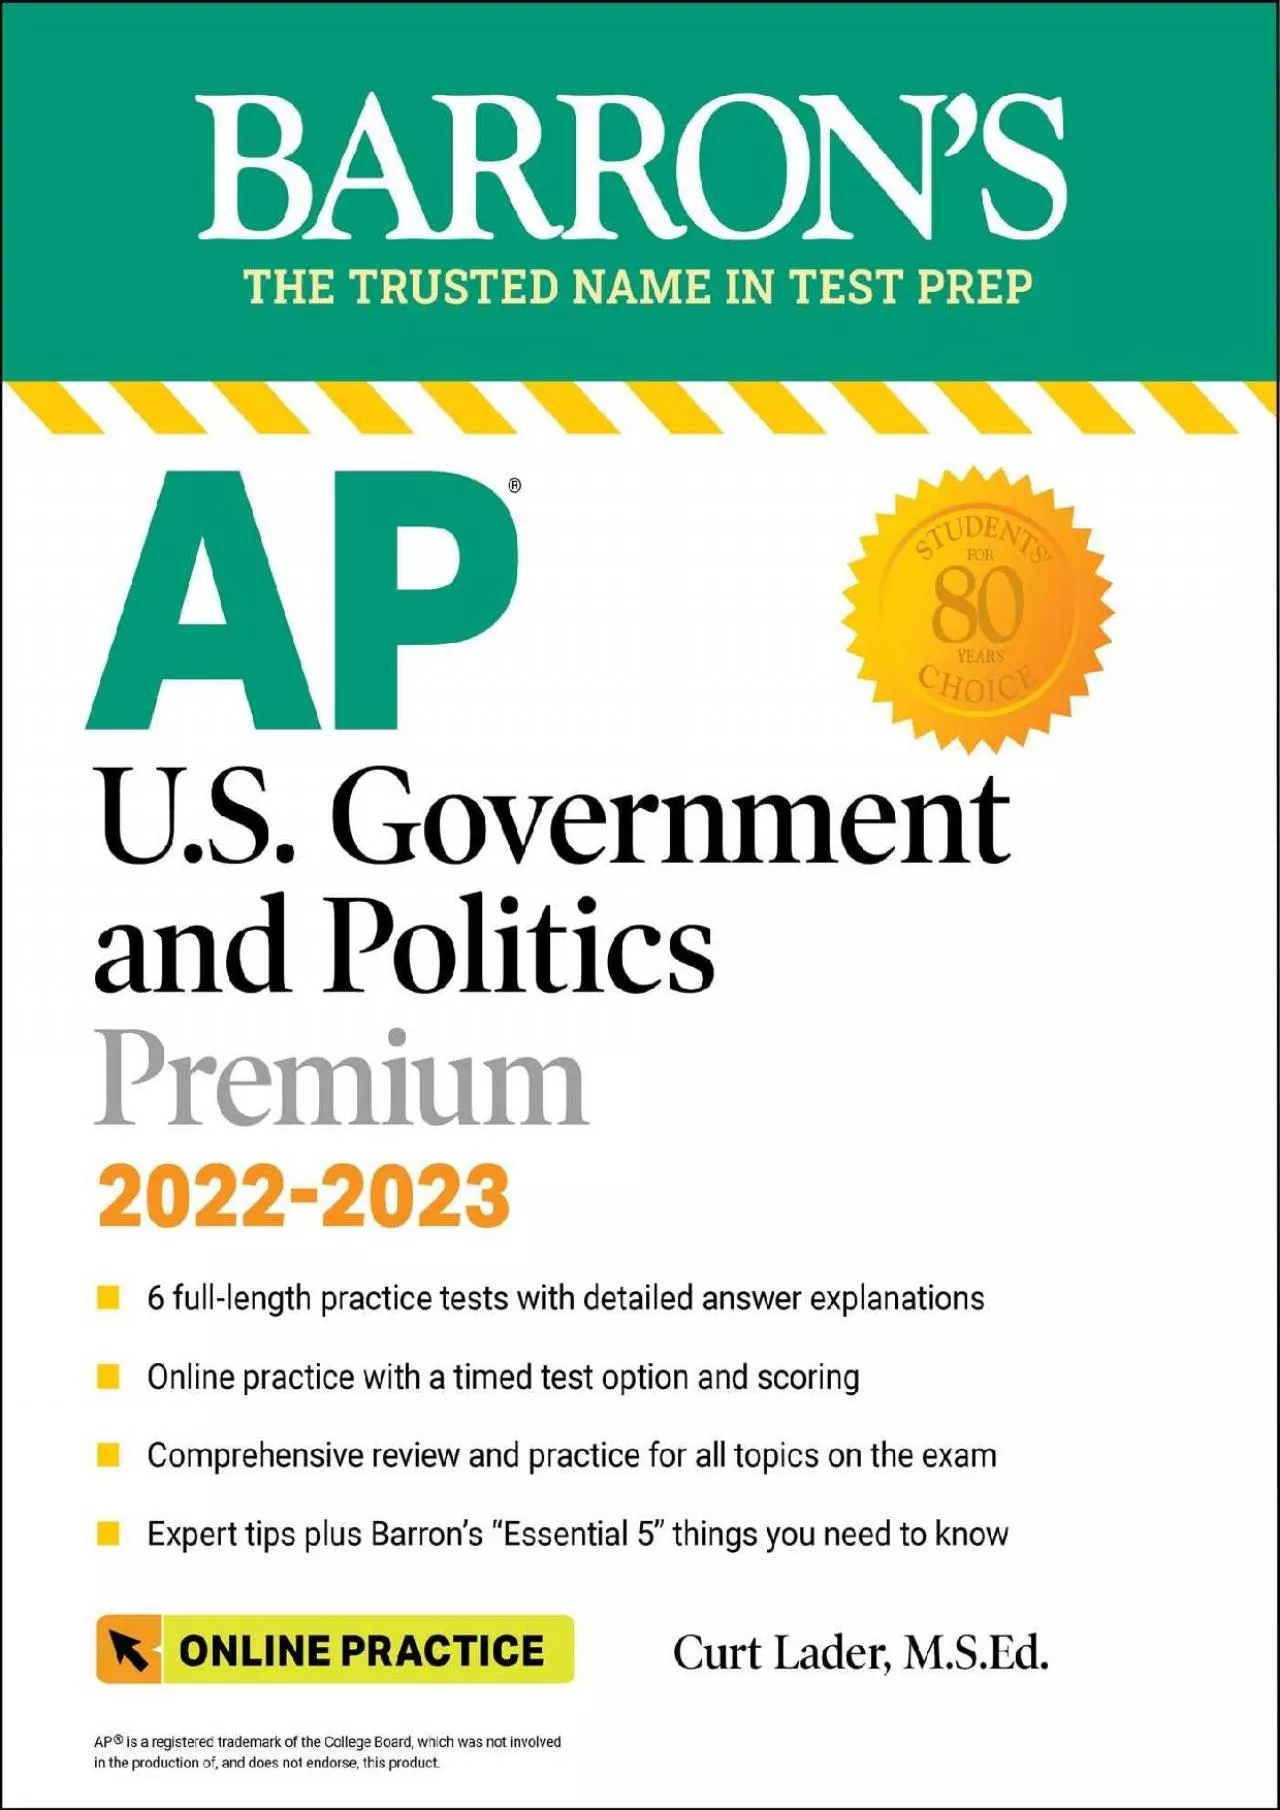 [EBOOK] AP U.S. Government and Politics Premium, 2022-2023: Comprehensive Review with